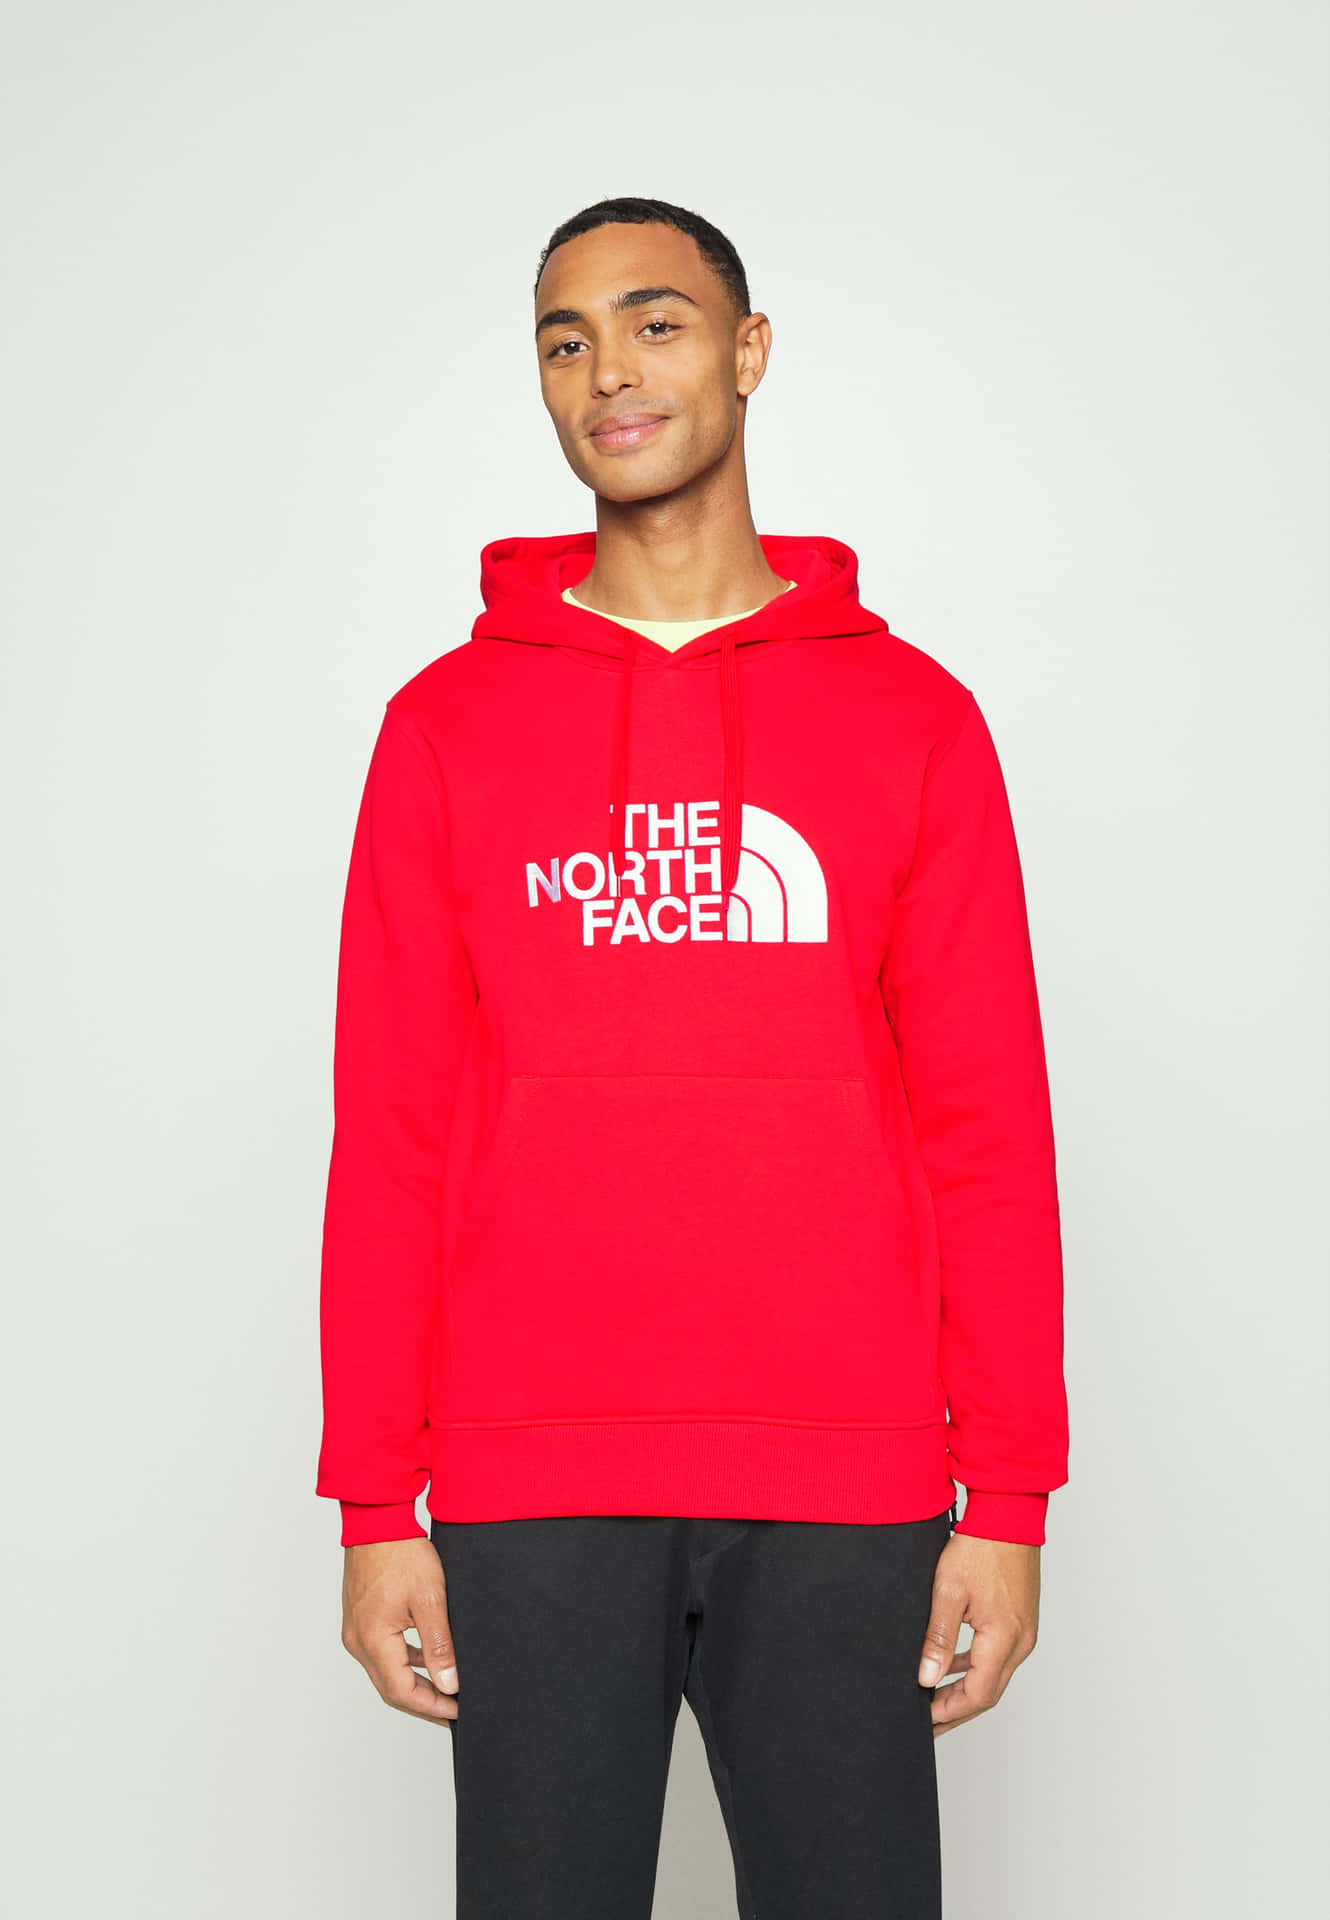 Young man in stylish red hoodie sweatshirt Wallpaper